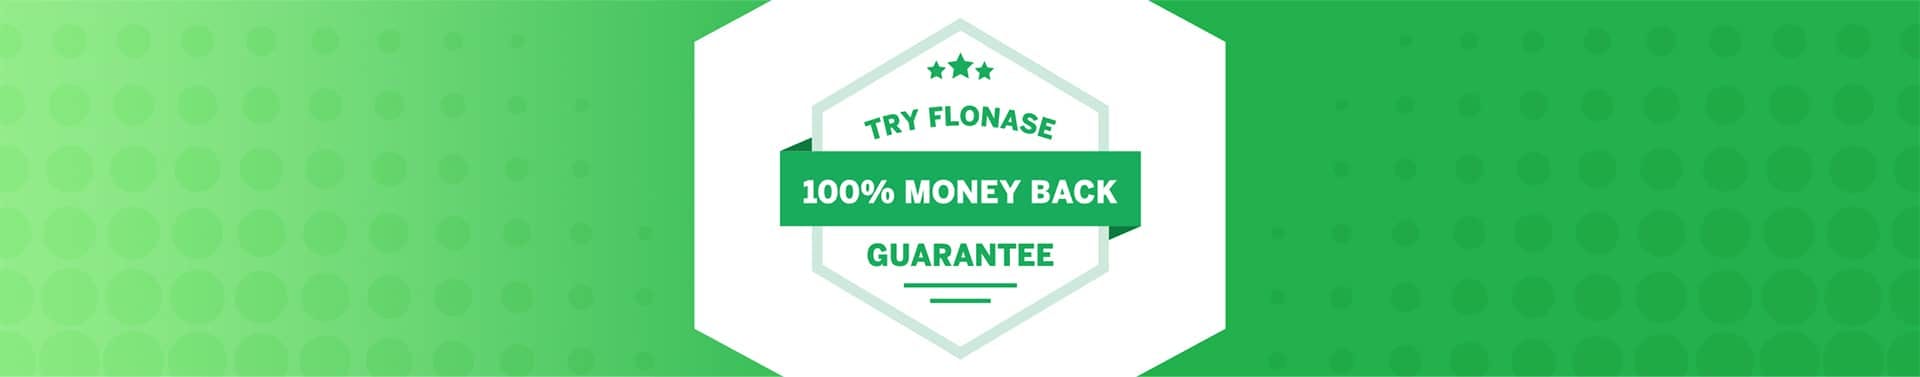 Flonase money back gurantee